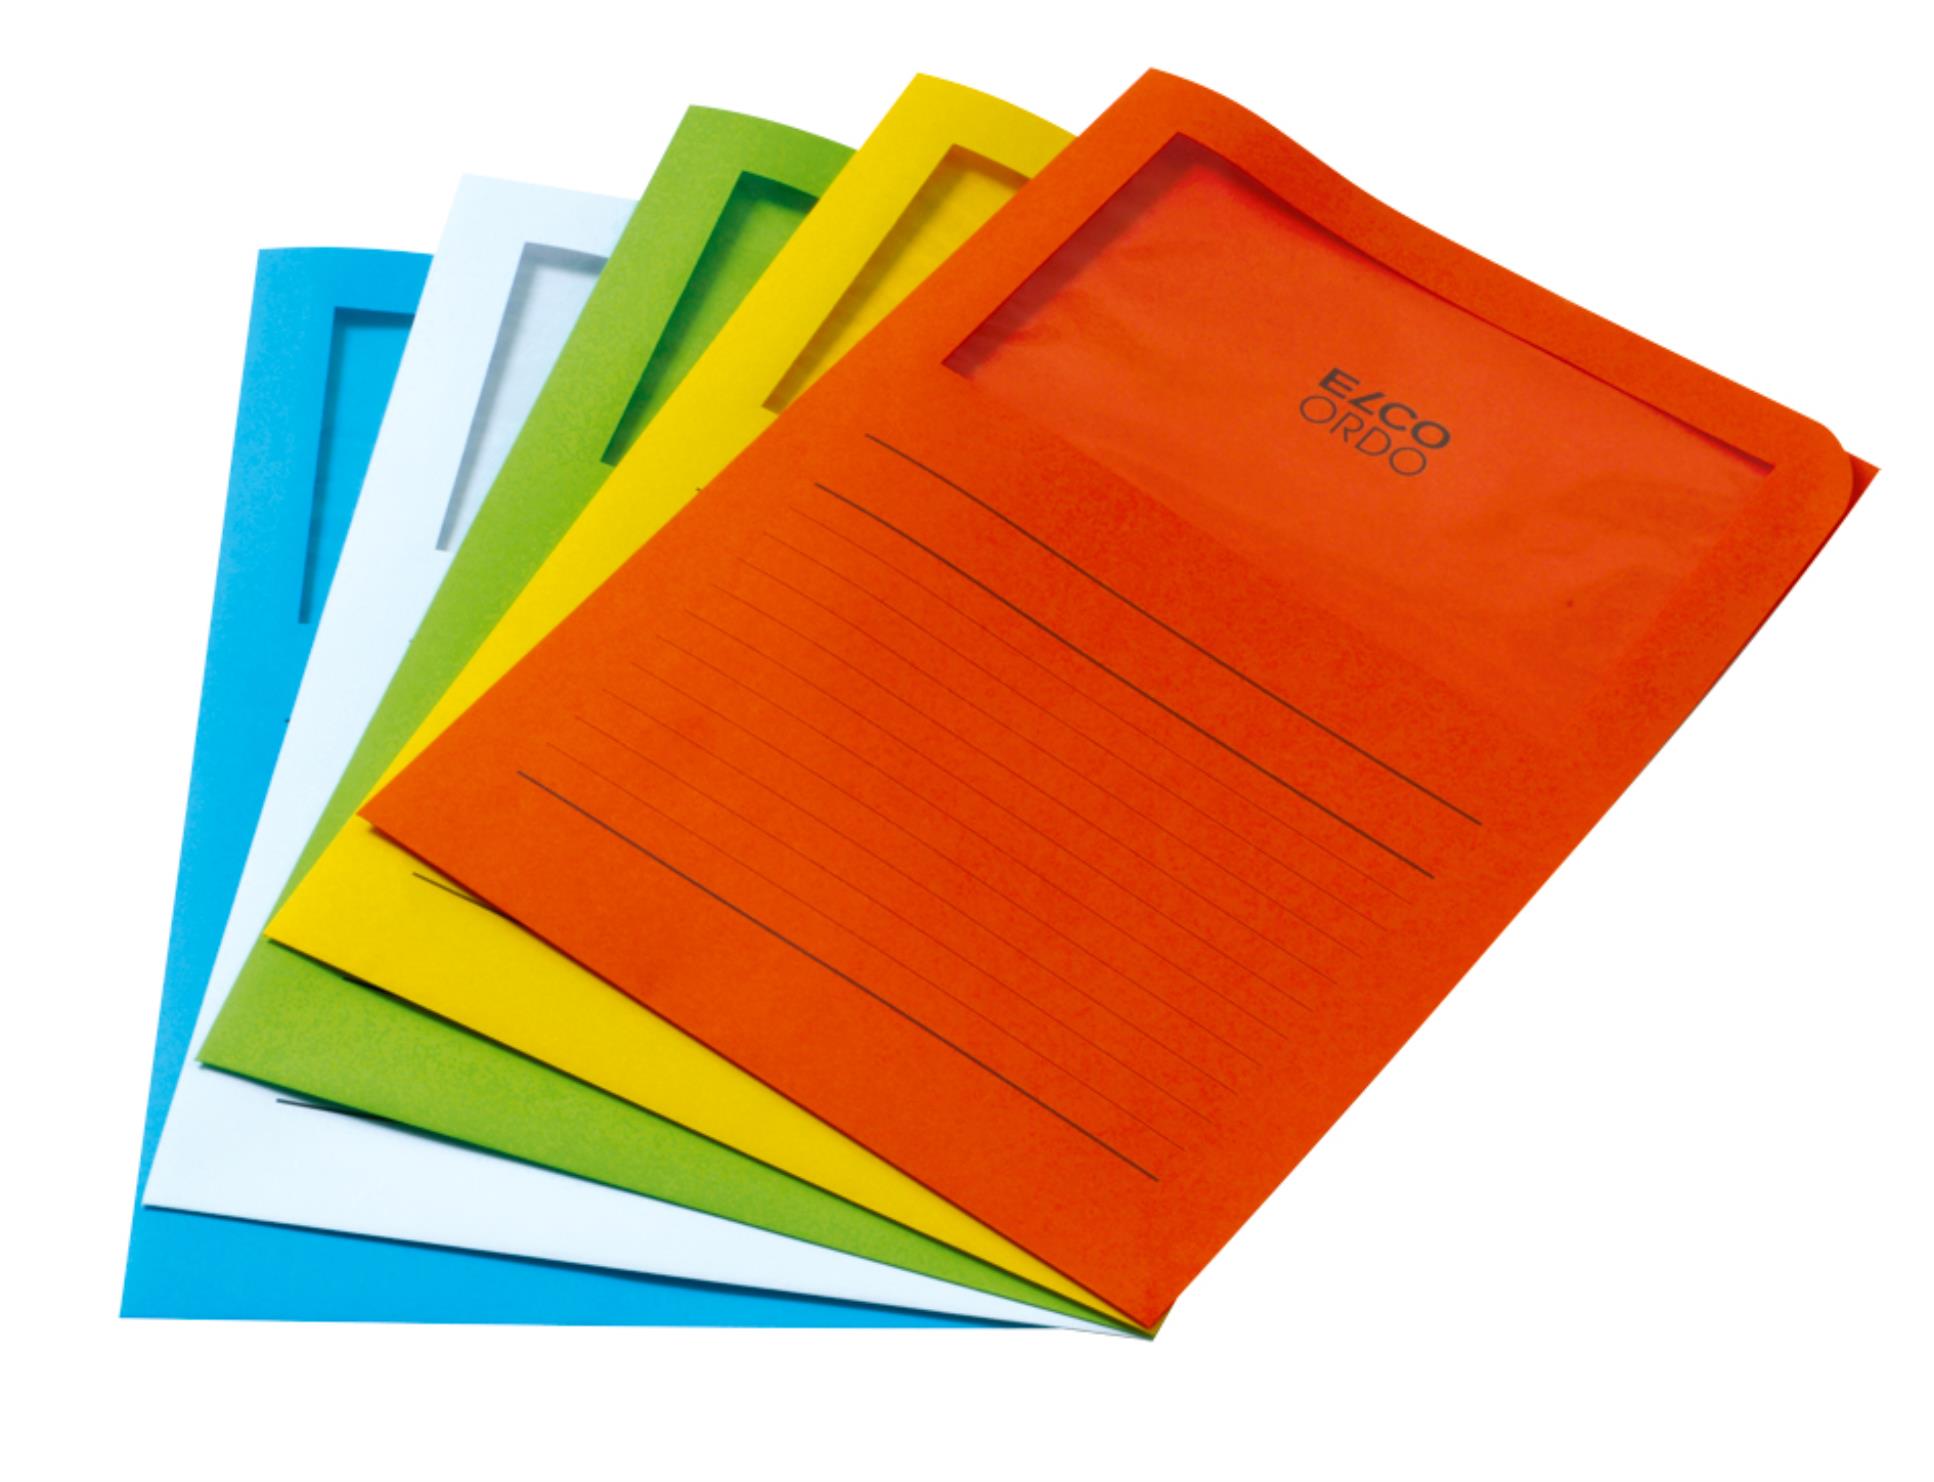 Elco Zakládací obal L s okénkem - A4, papírový, oranžový, 1 ks